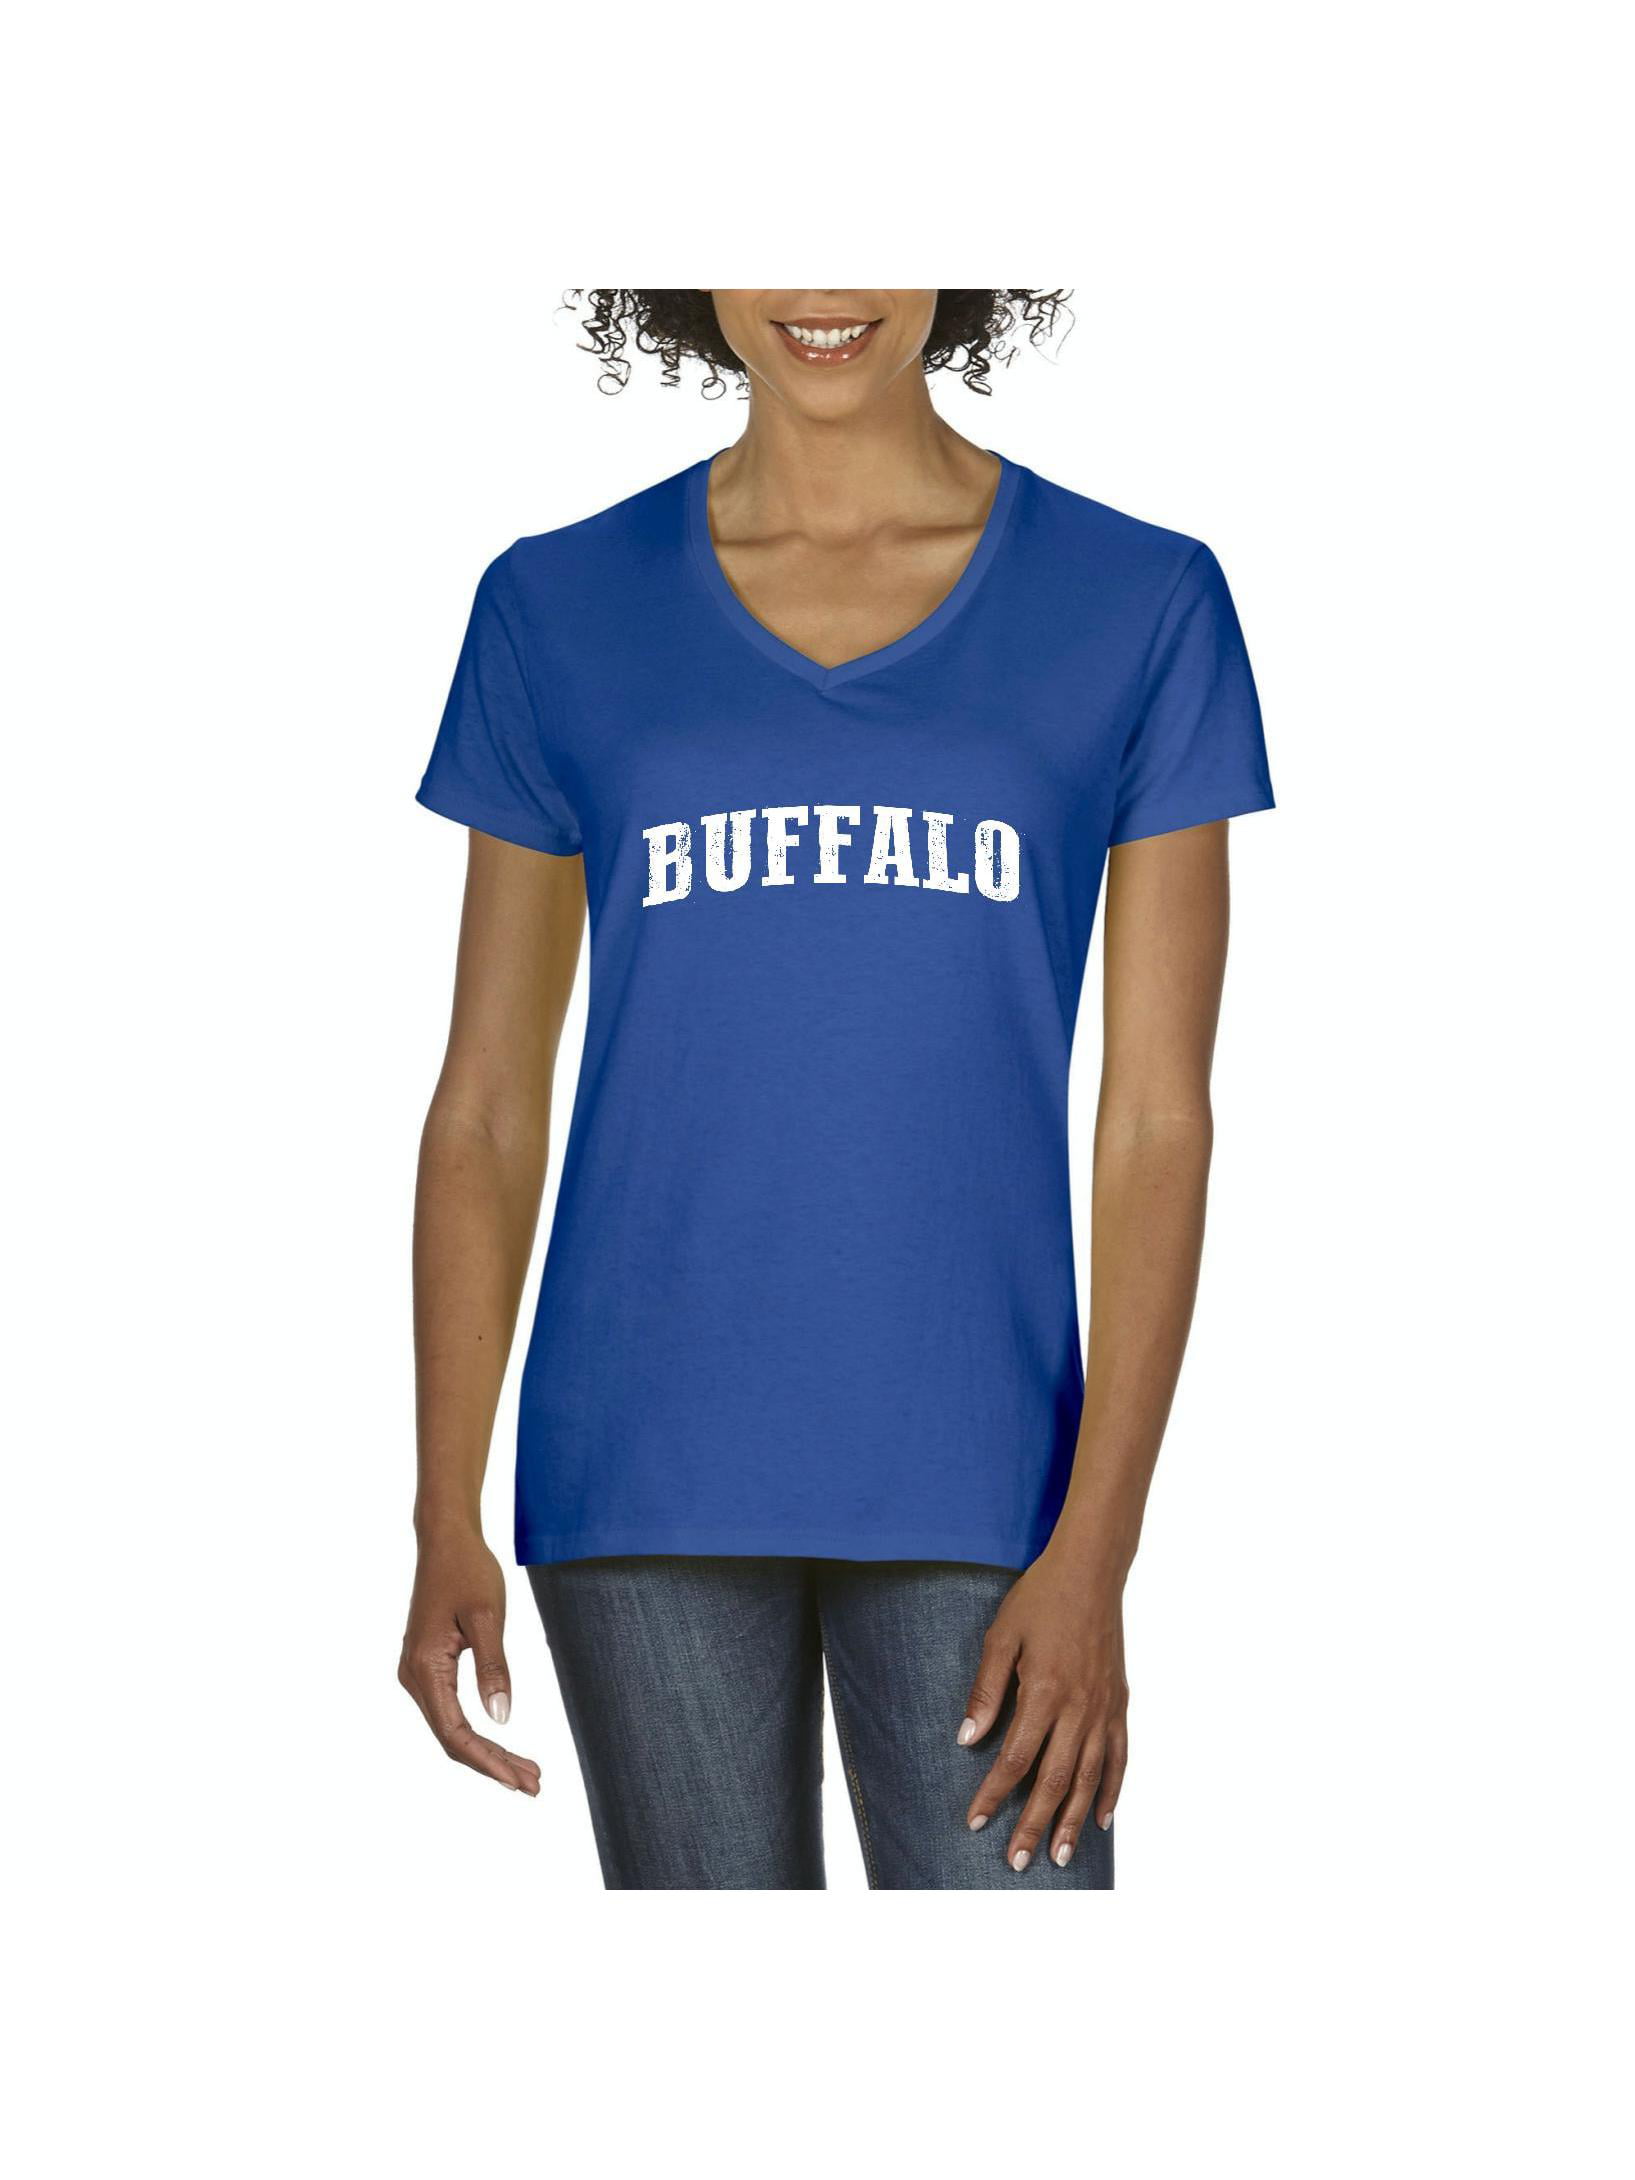 buffalo v neck t shirts